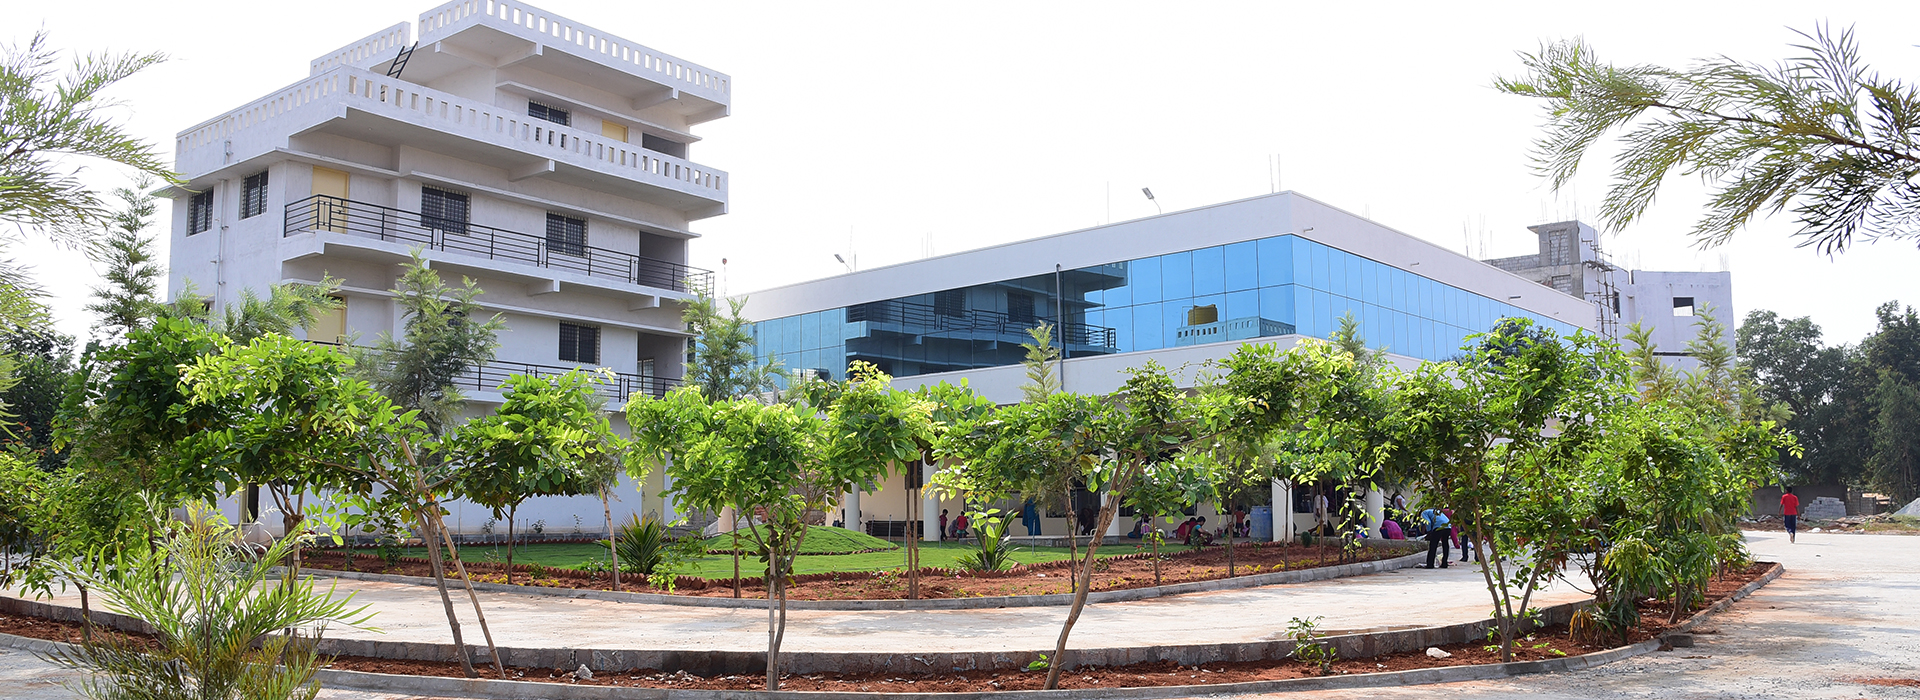 Lorven St.Xavier's College, Bengaluru Image